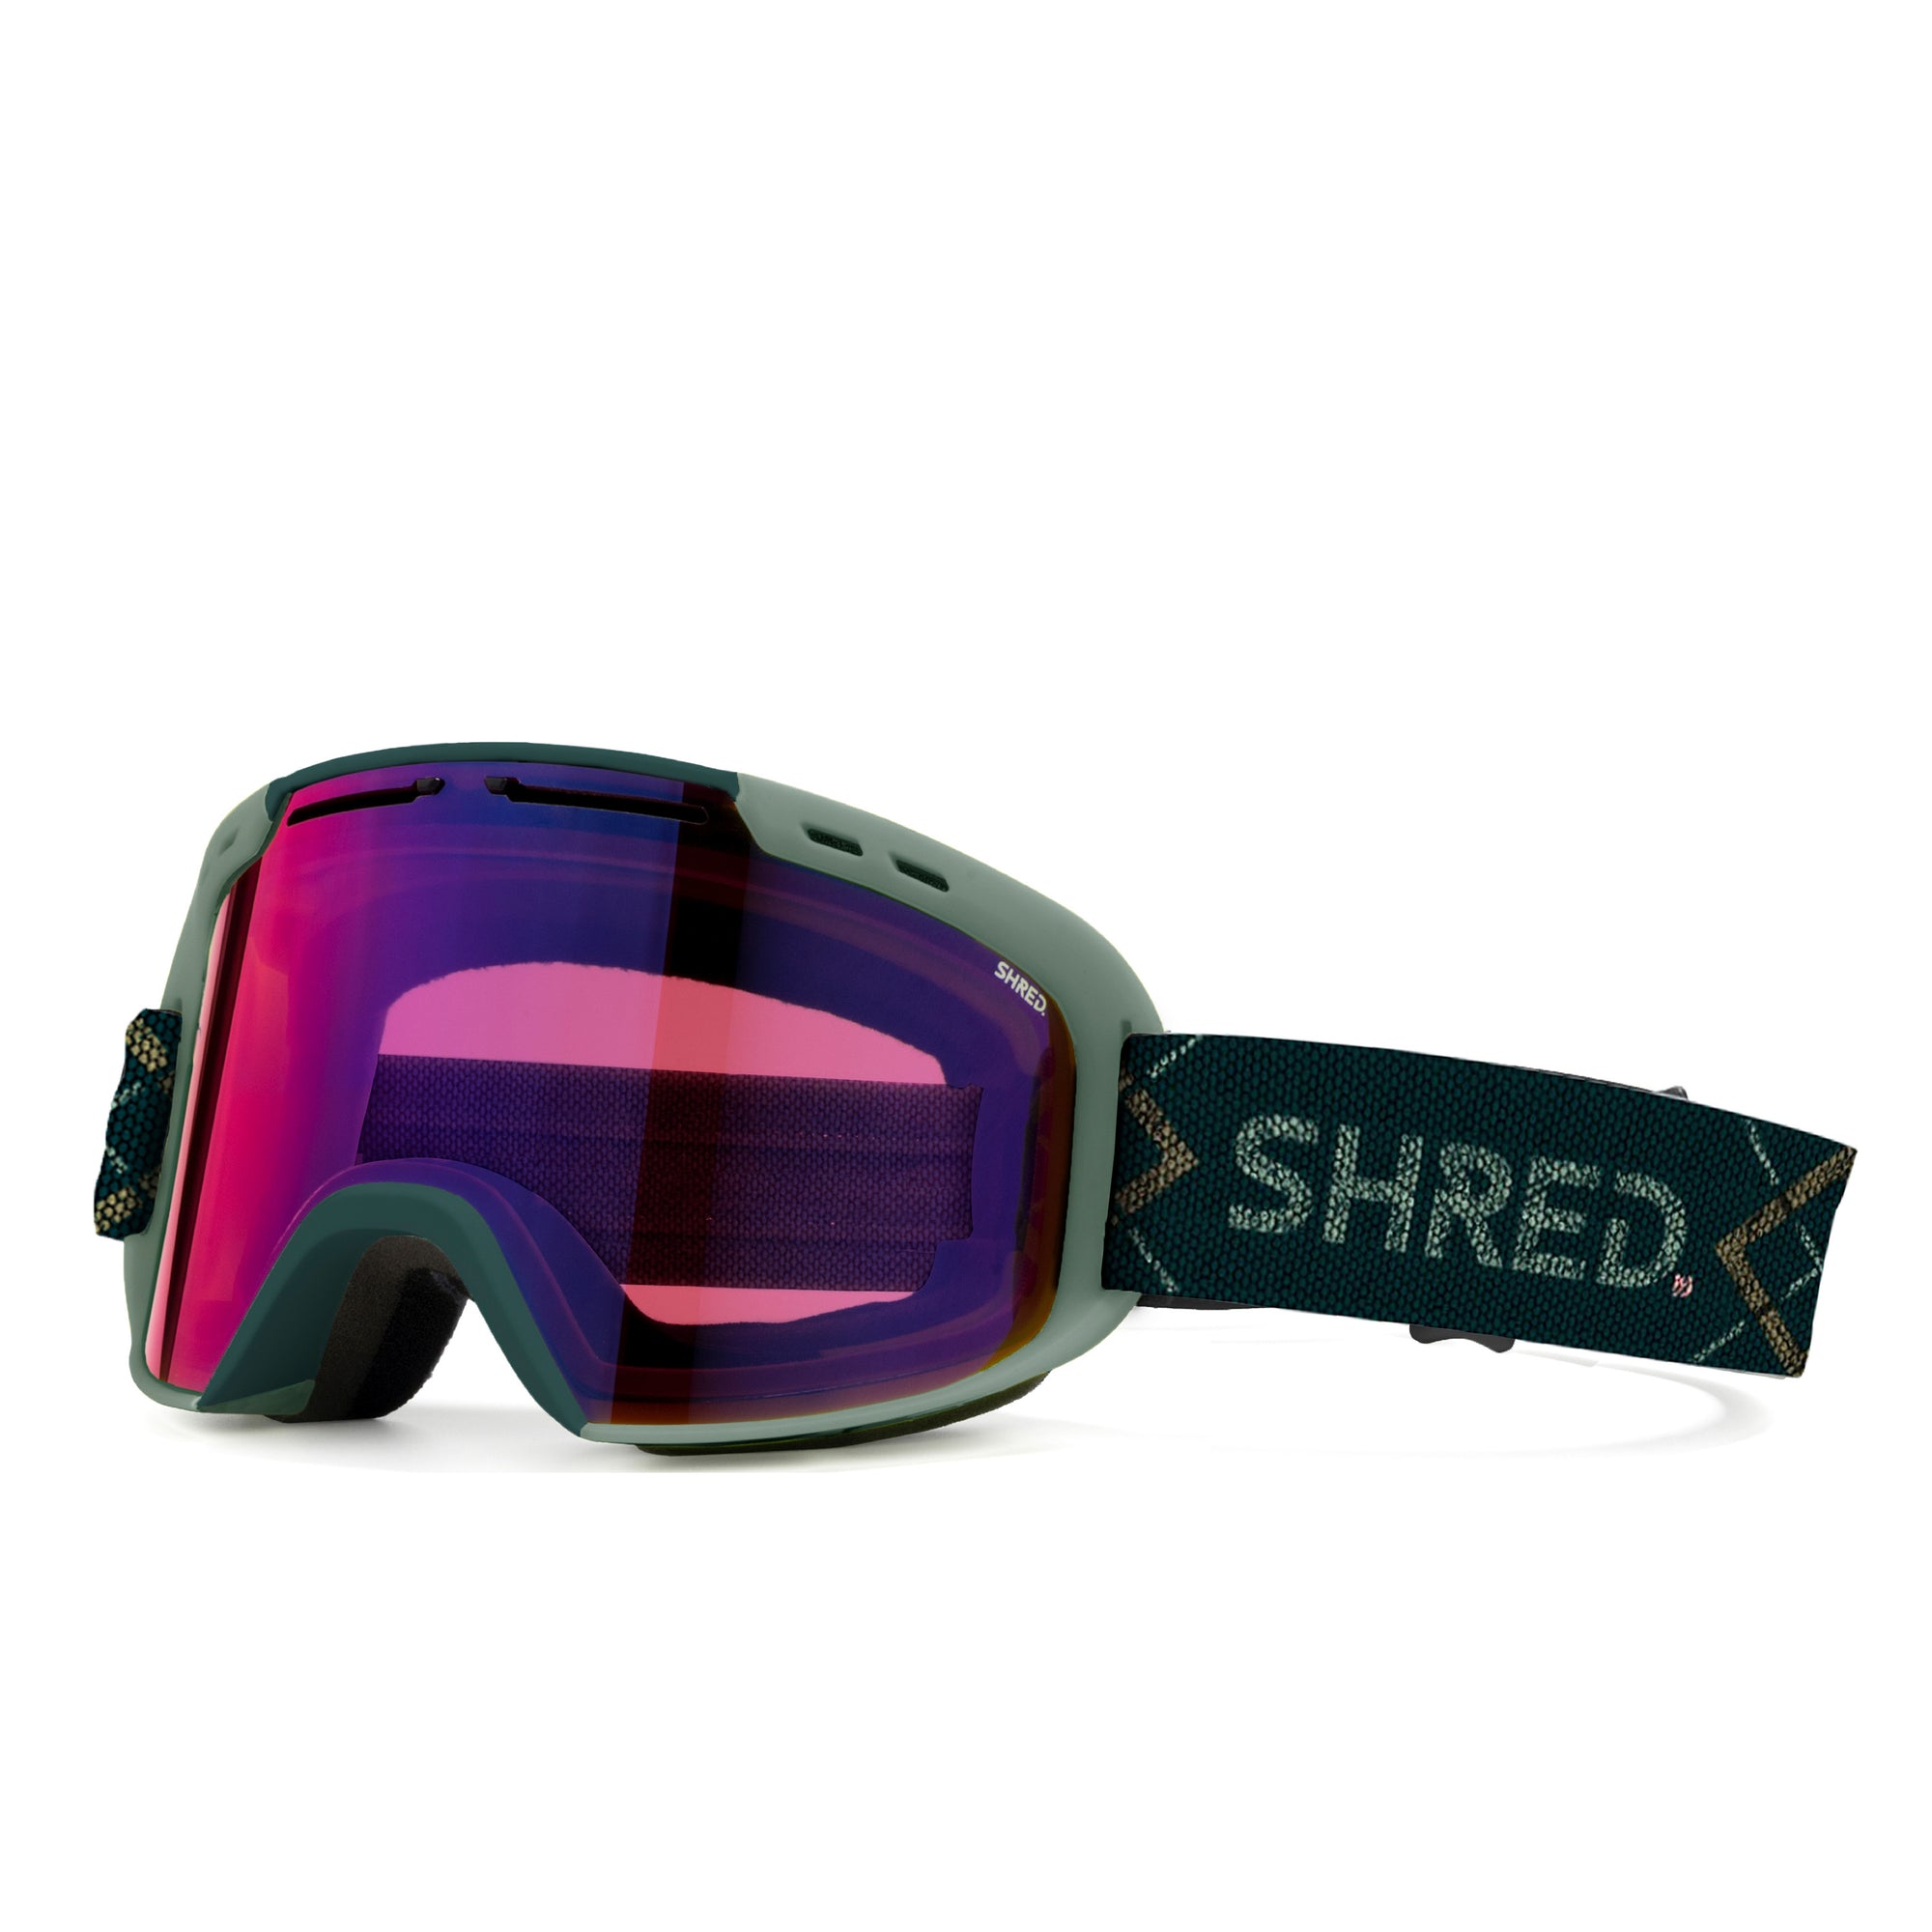 Amazify - Ski Goggles|GOAMAM11C